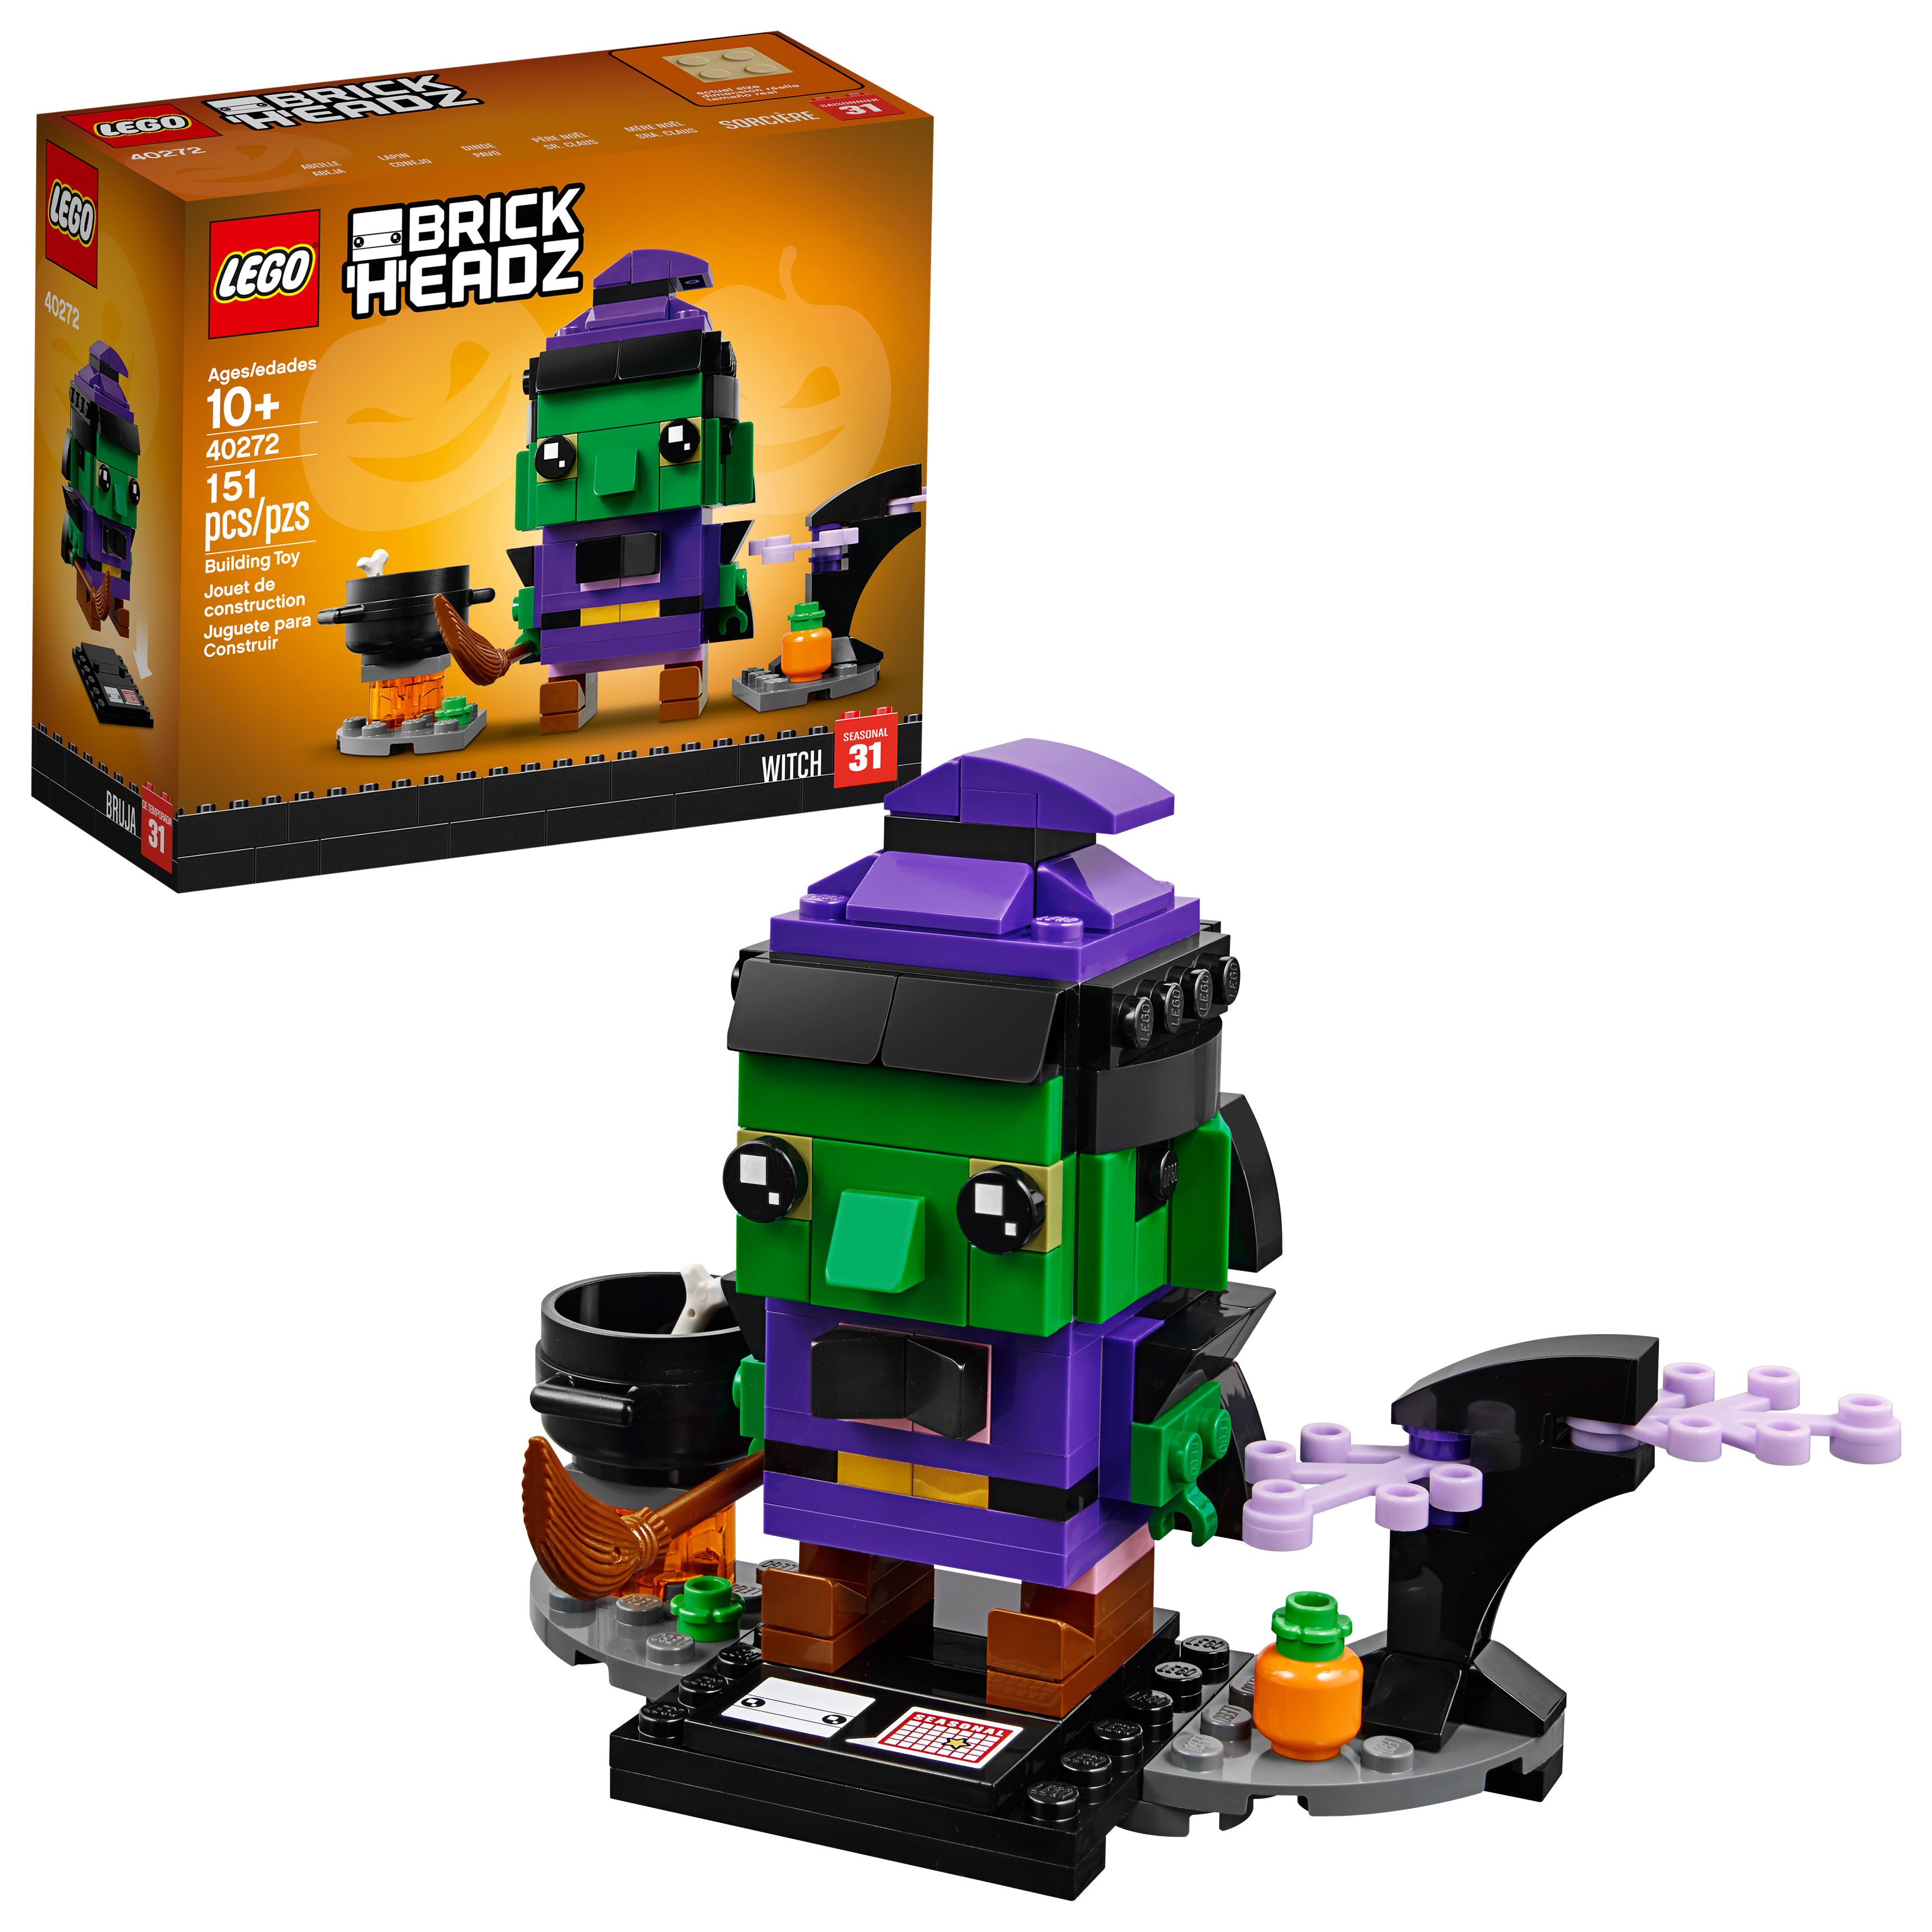 LEGO BrickHeadz Halloween Witch 40272 - image 1 of 6